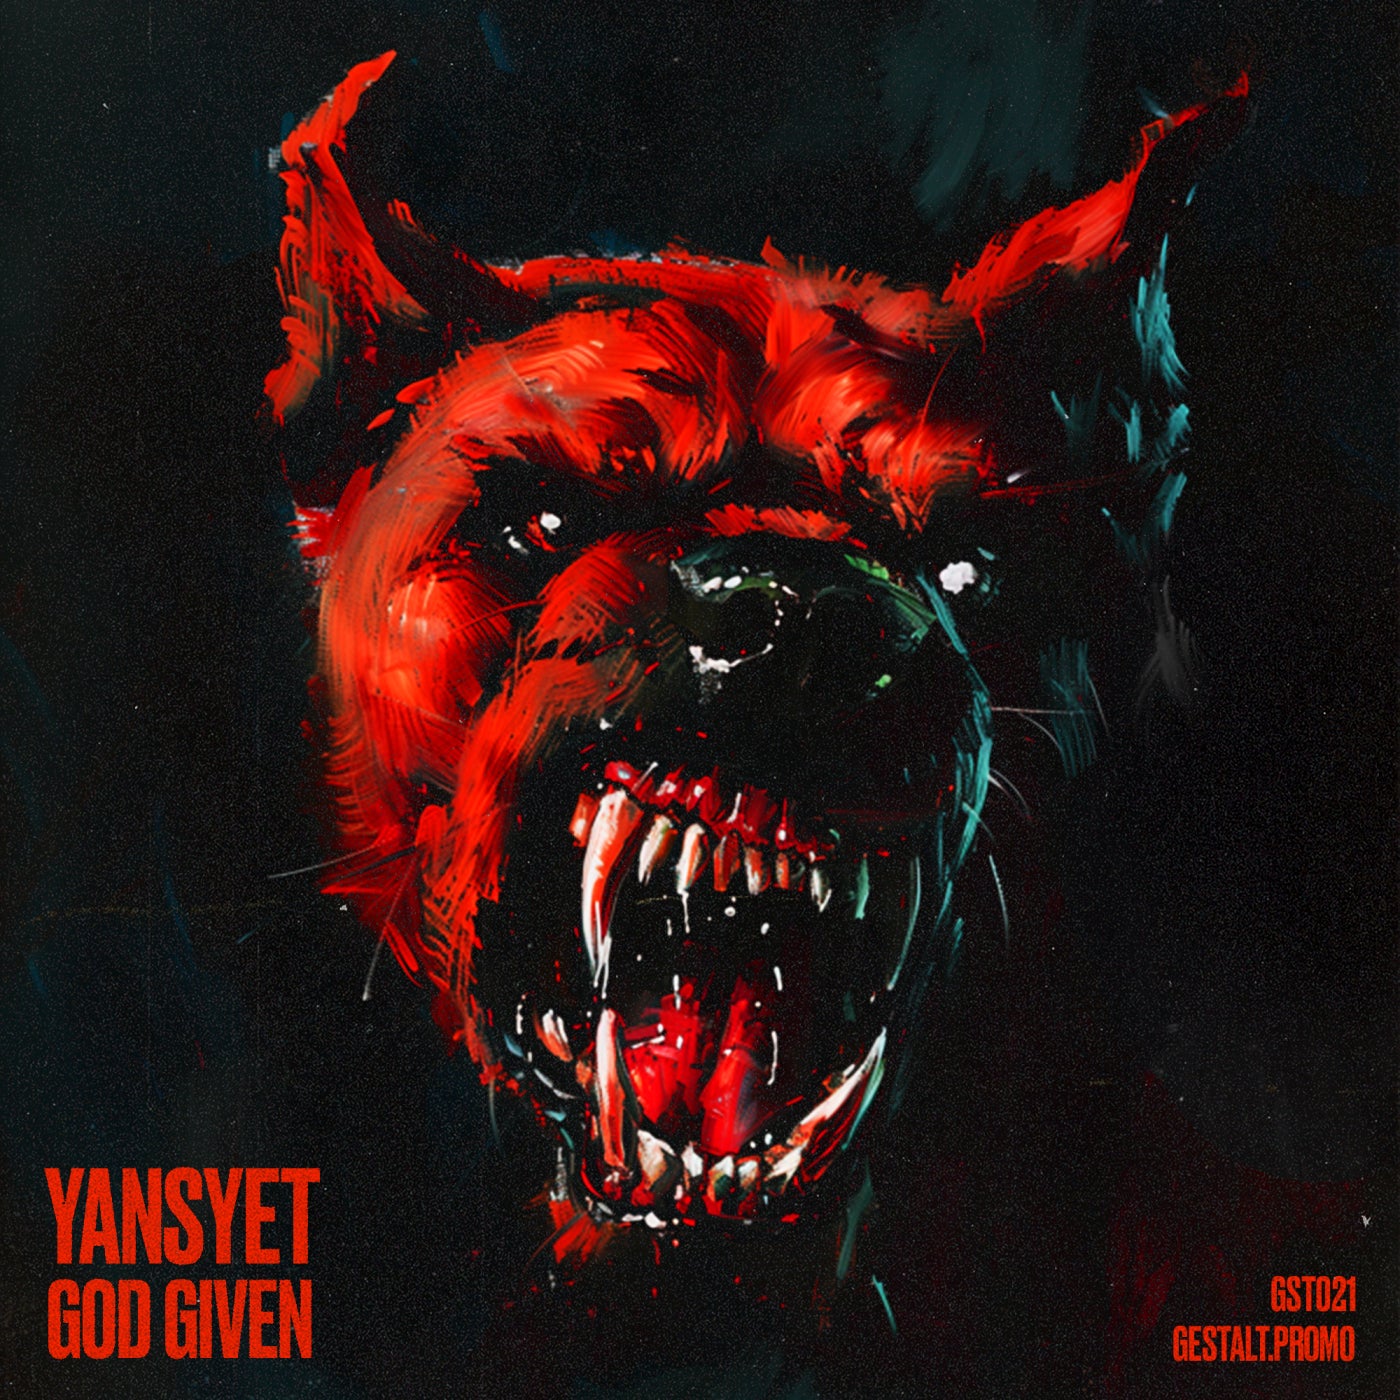 Cover - Yansyet - God Given (Original Mix)